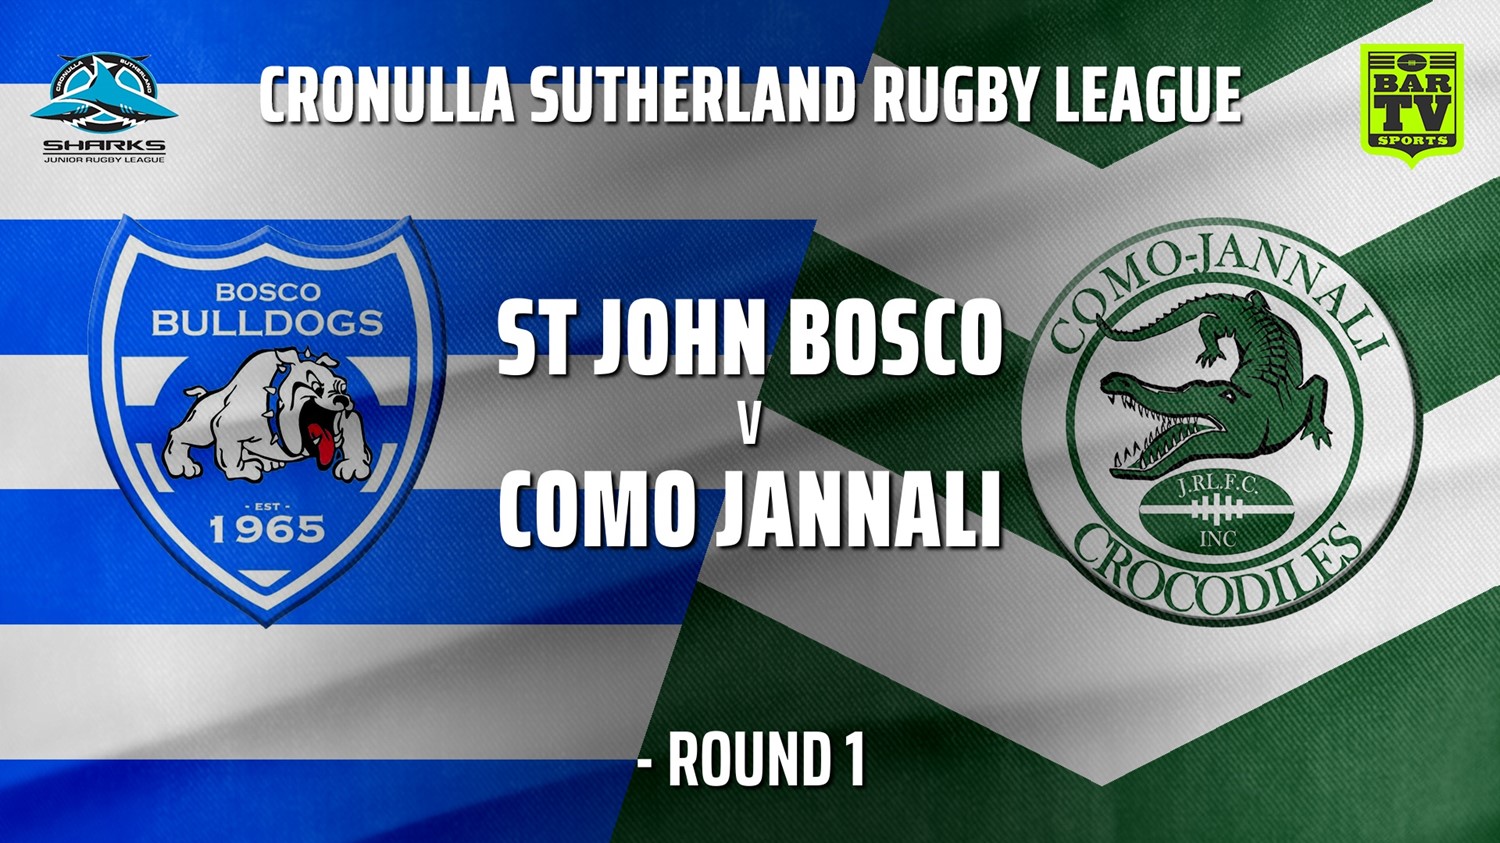 210501-Cronulla JRL Southern Under 13s GOLD Round 1 - St John Bosco Bulldogs v Como Jannali Crocodiles (3) Minigame Slate Image